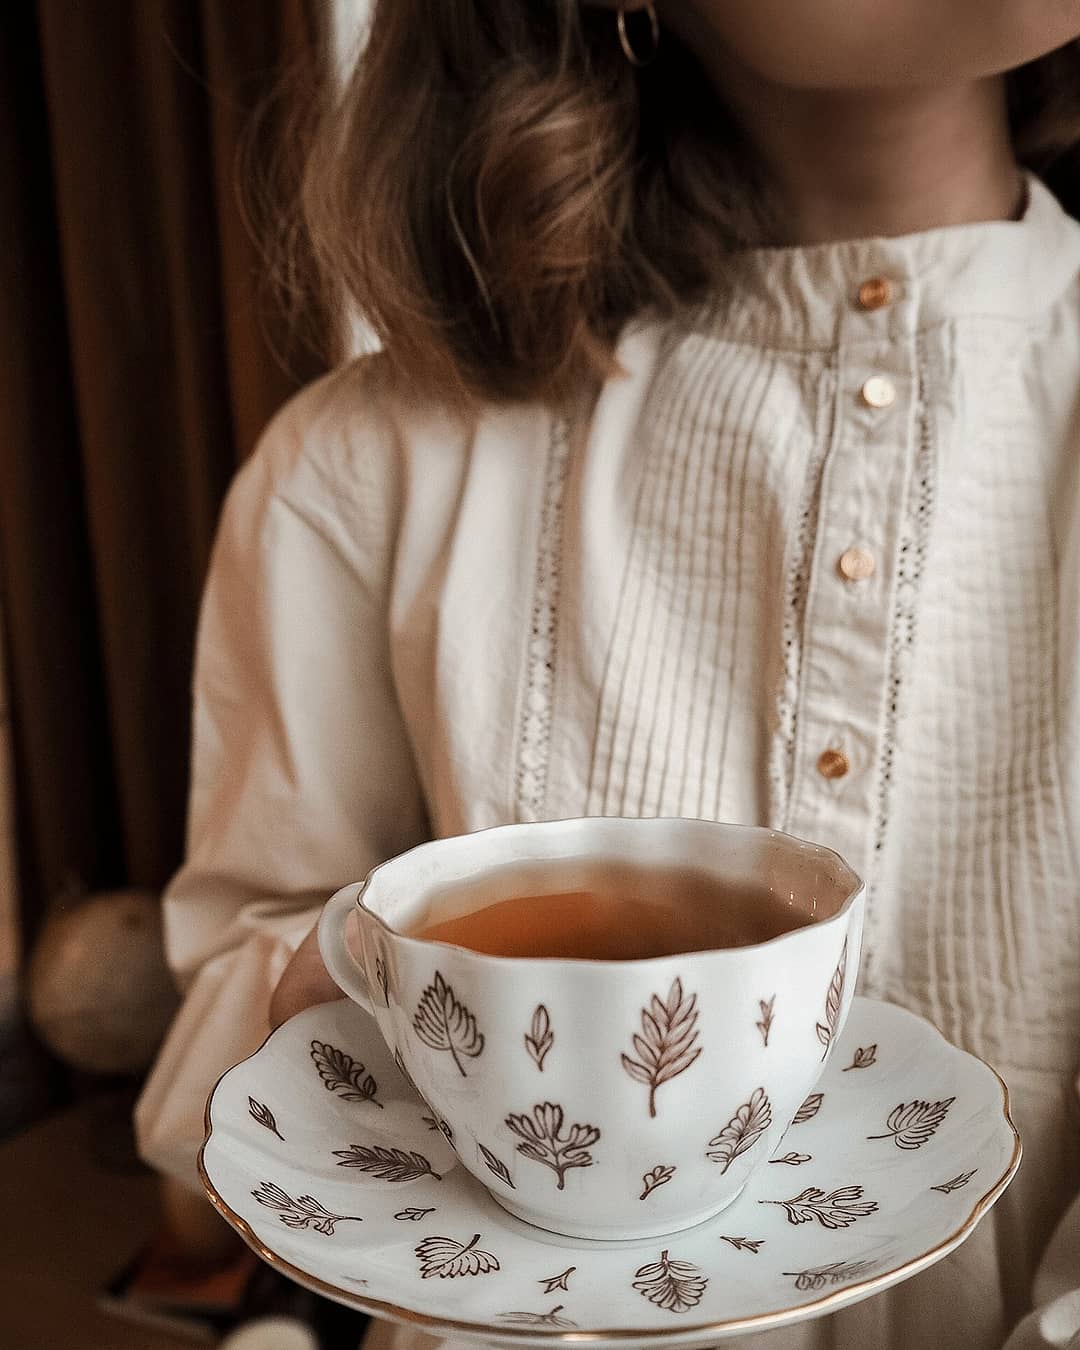 Фото В руке девушки чашка чая на блюдце, by annasofiapark